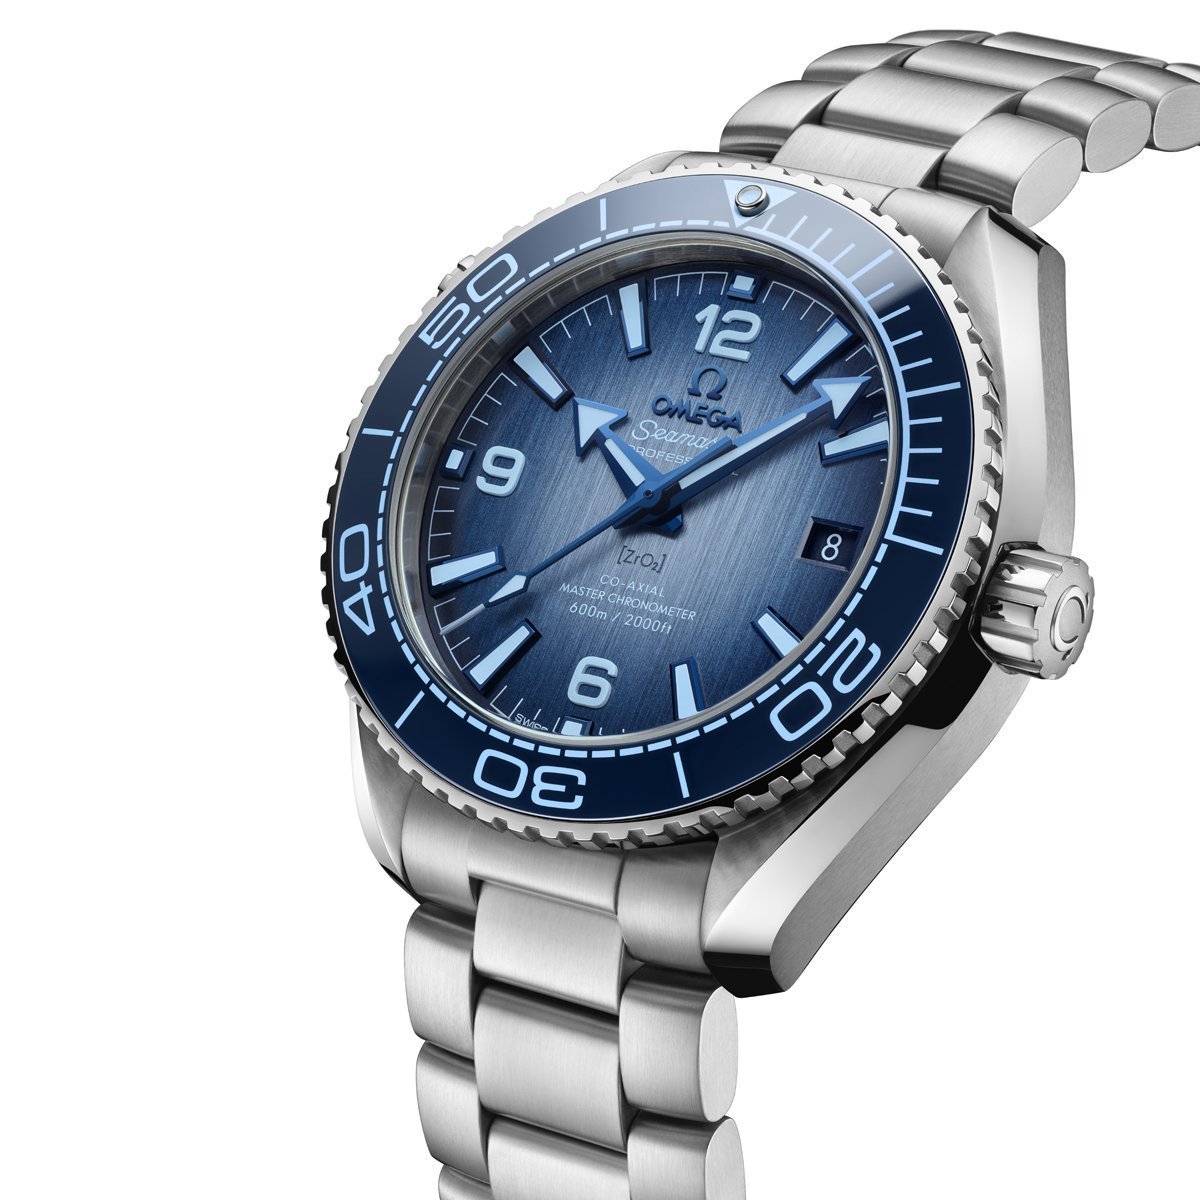 Seamaster Planet Ocean 600m Chronometer 39.5mm Watch